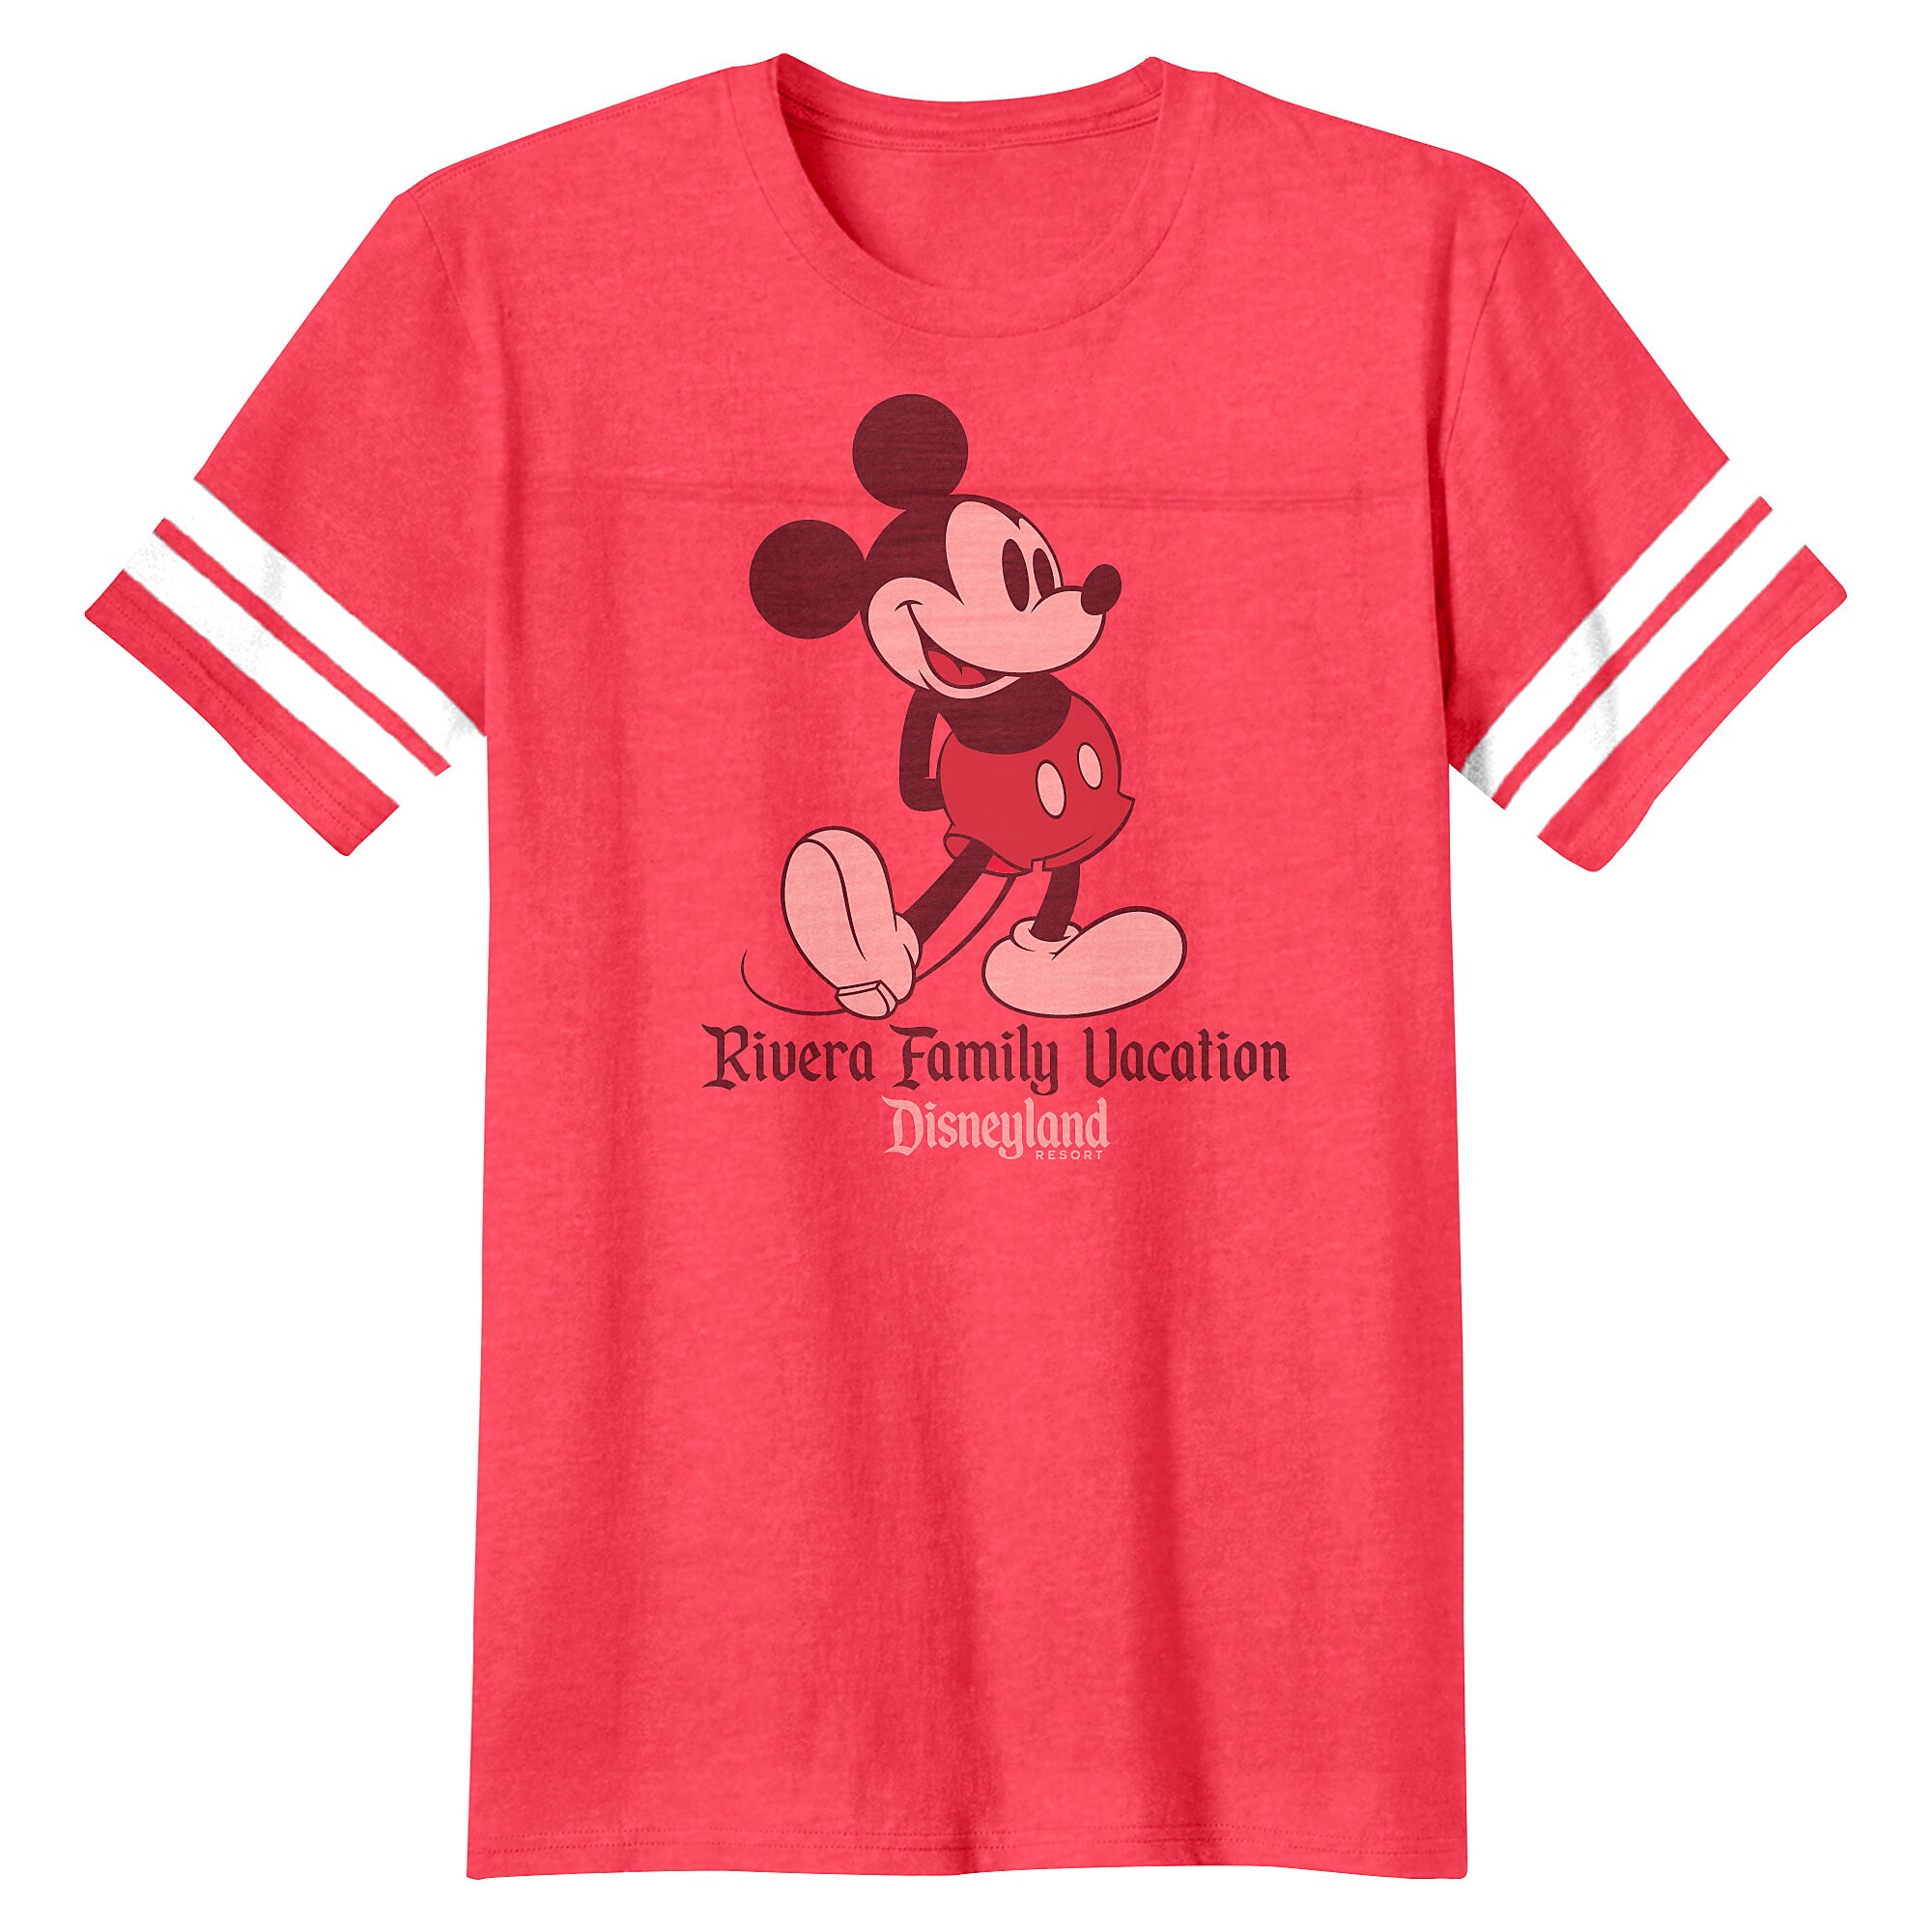 Kids' Mickey Mouse Family Vacation Football T-Shirt - Disneyland - Customized